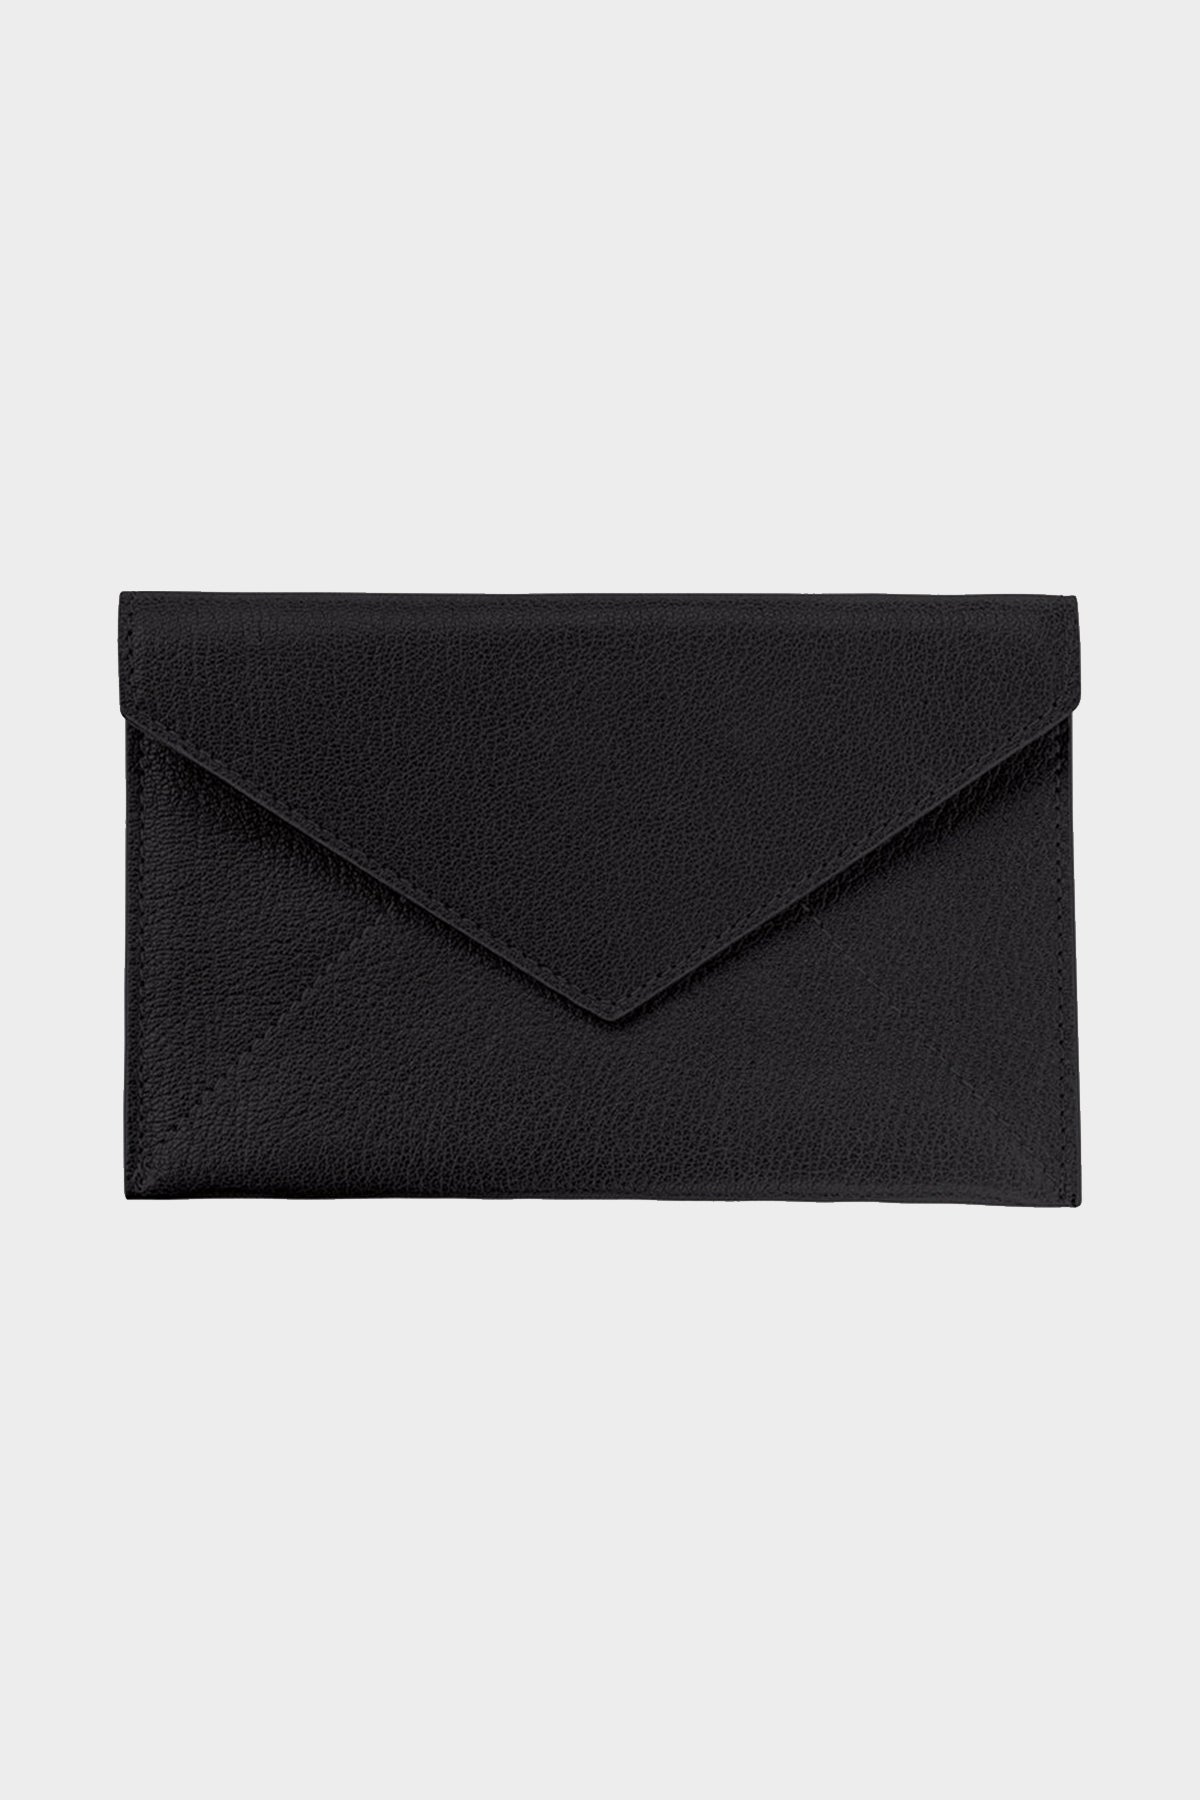 Black Goatskin Leather Medium Envelope - shop-olivia.com